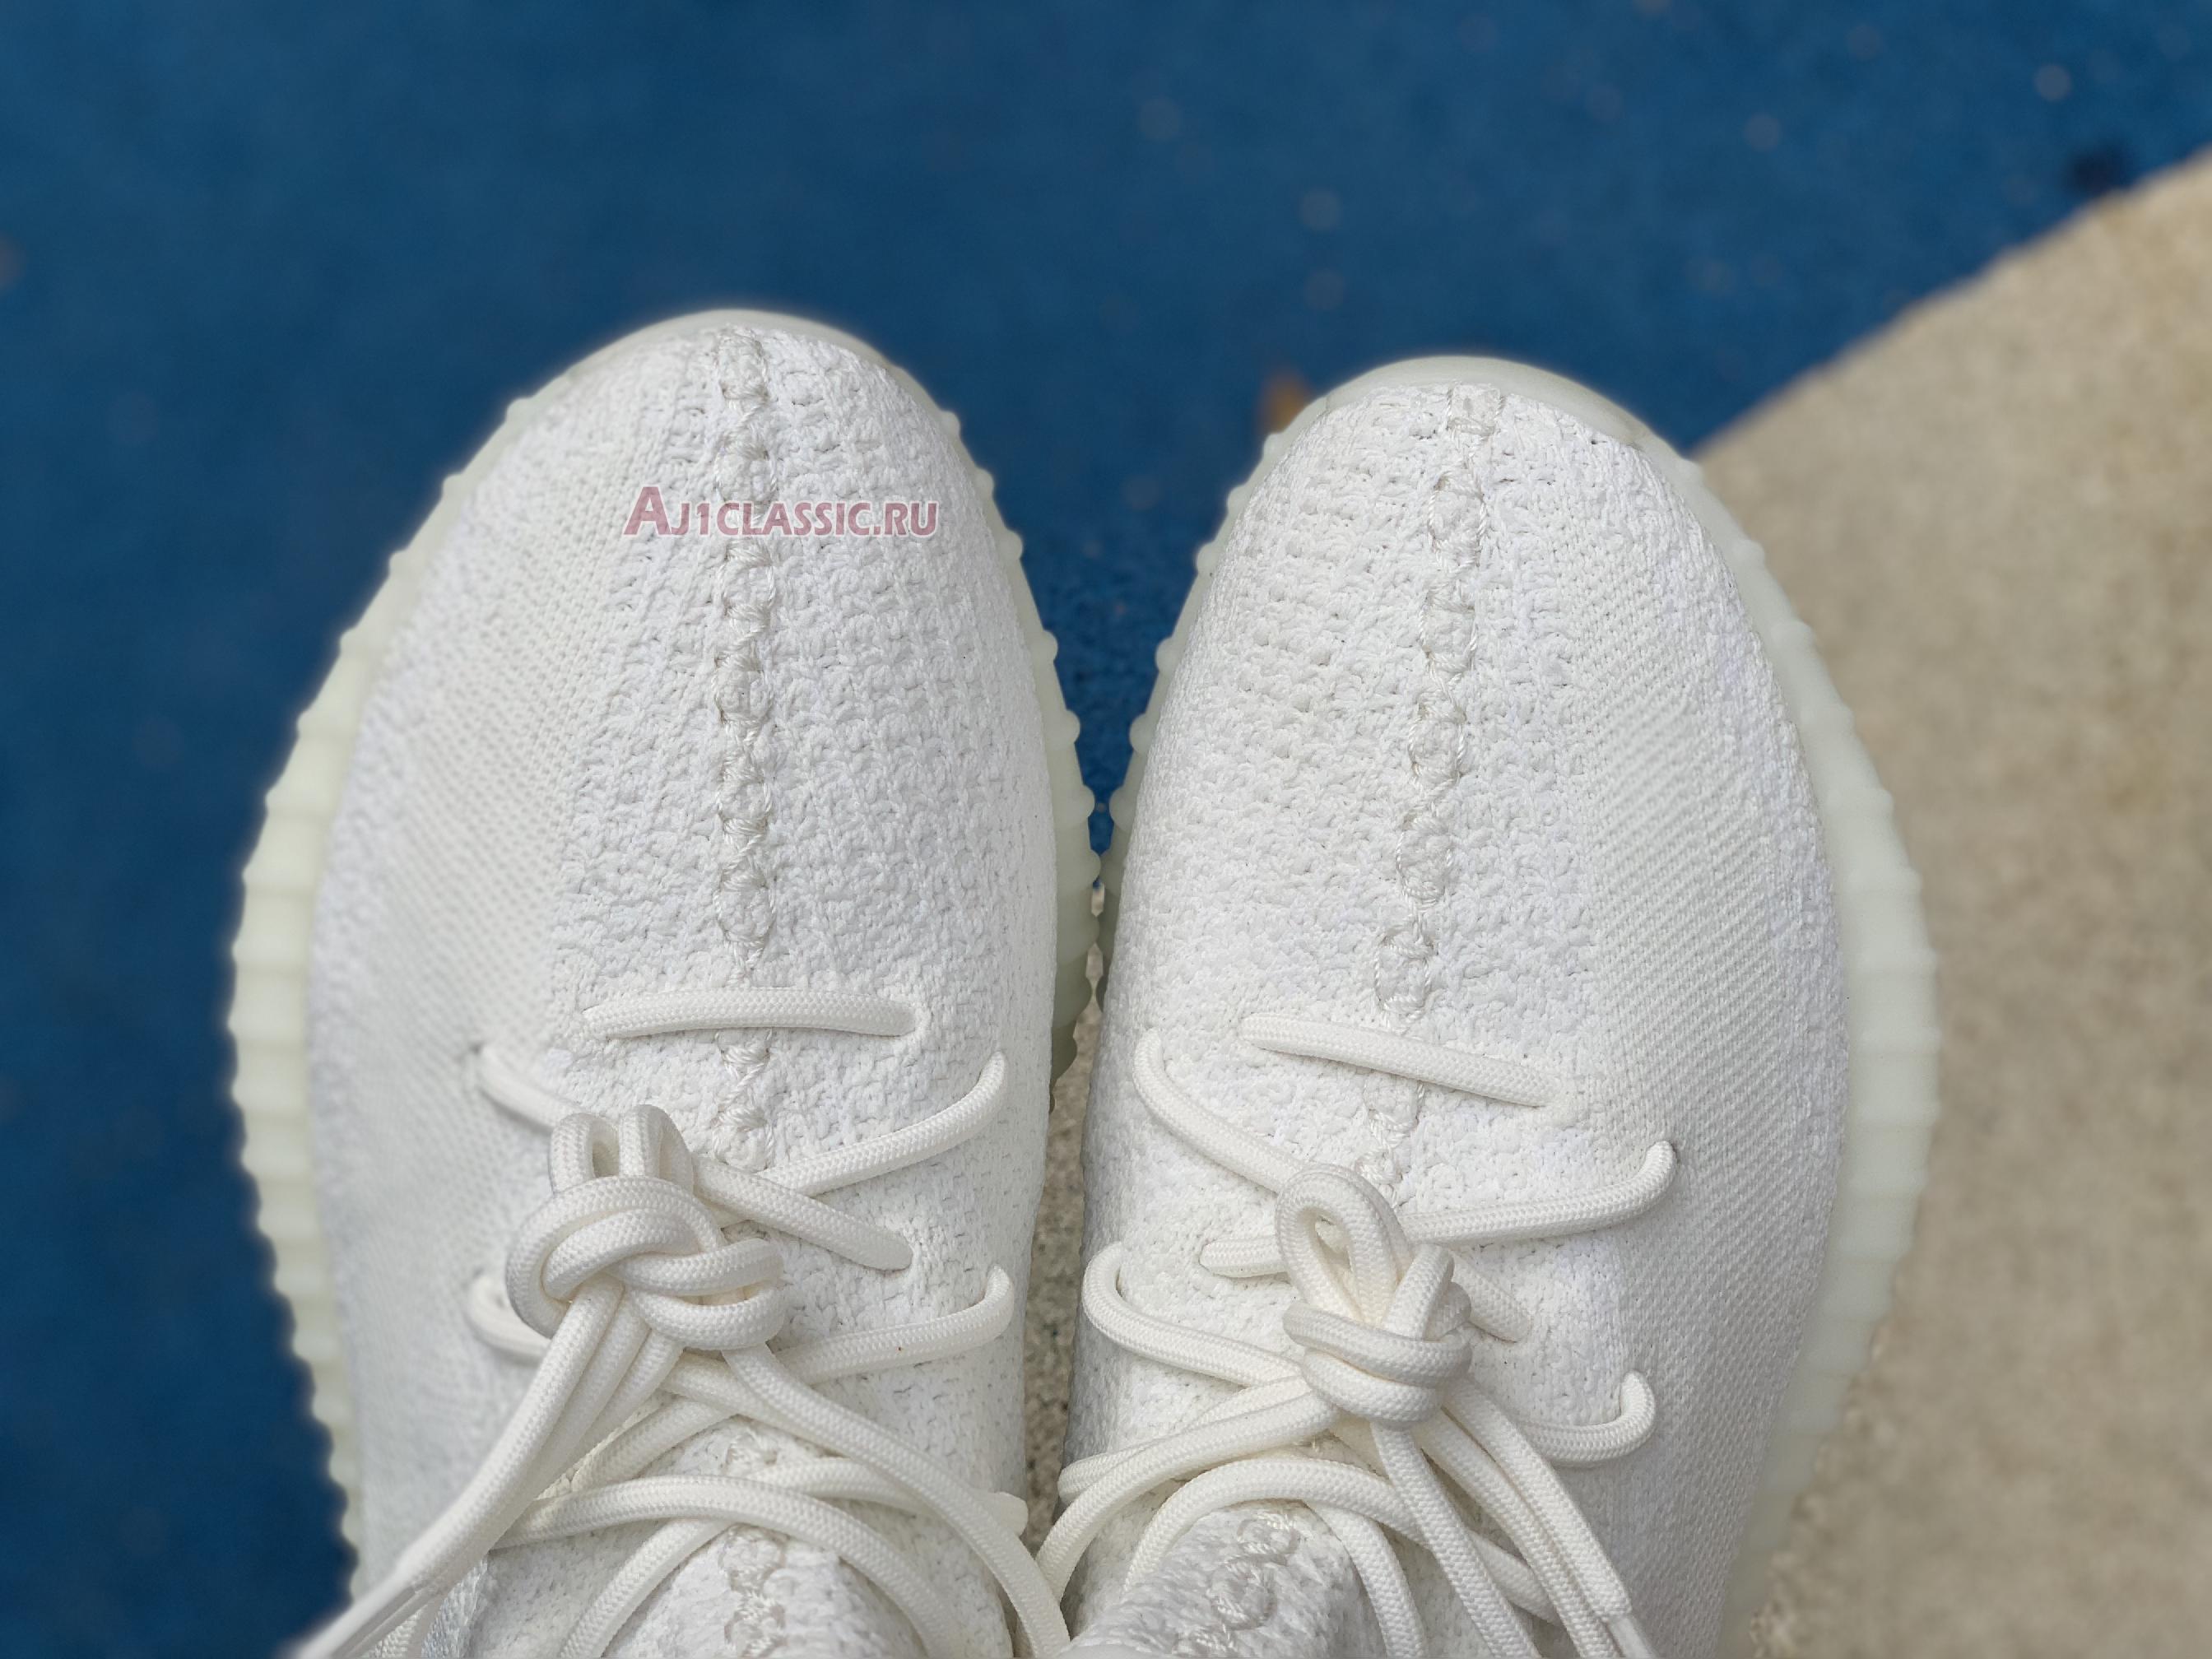 Adidas Yeezy Boost 350 V2 Cream White Triple White CP9366 Cream White/Cream White/Core White Sneakers